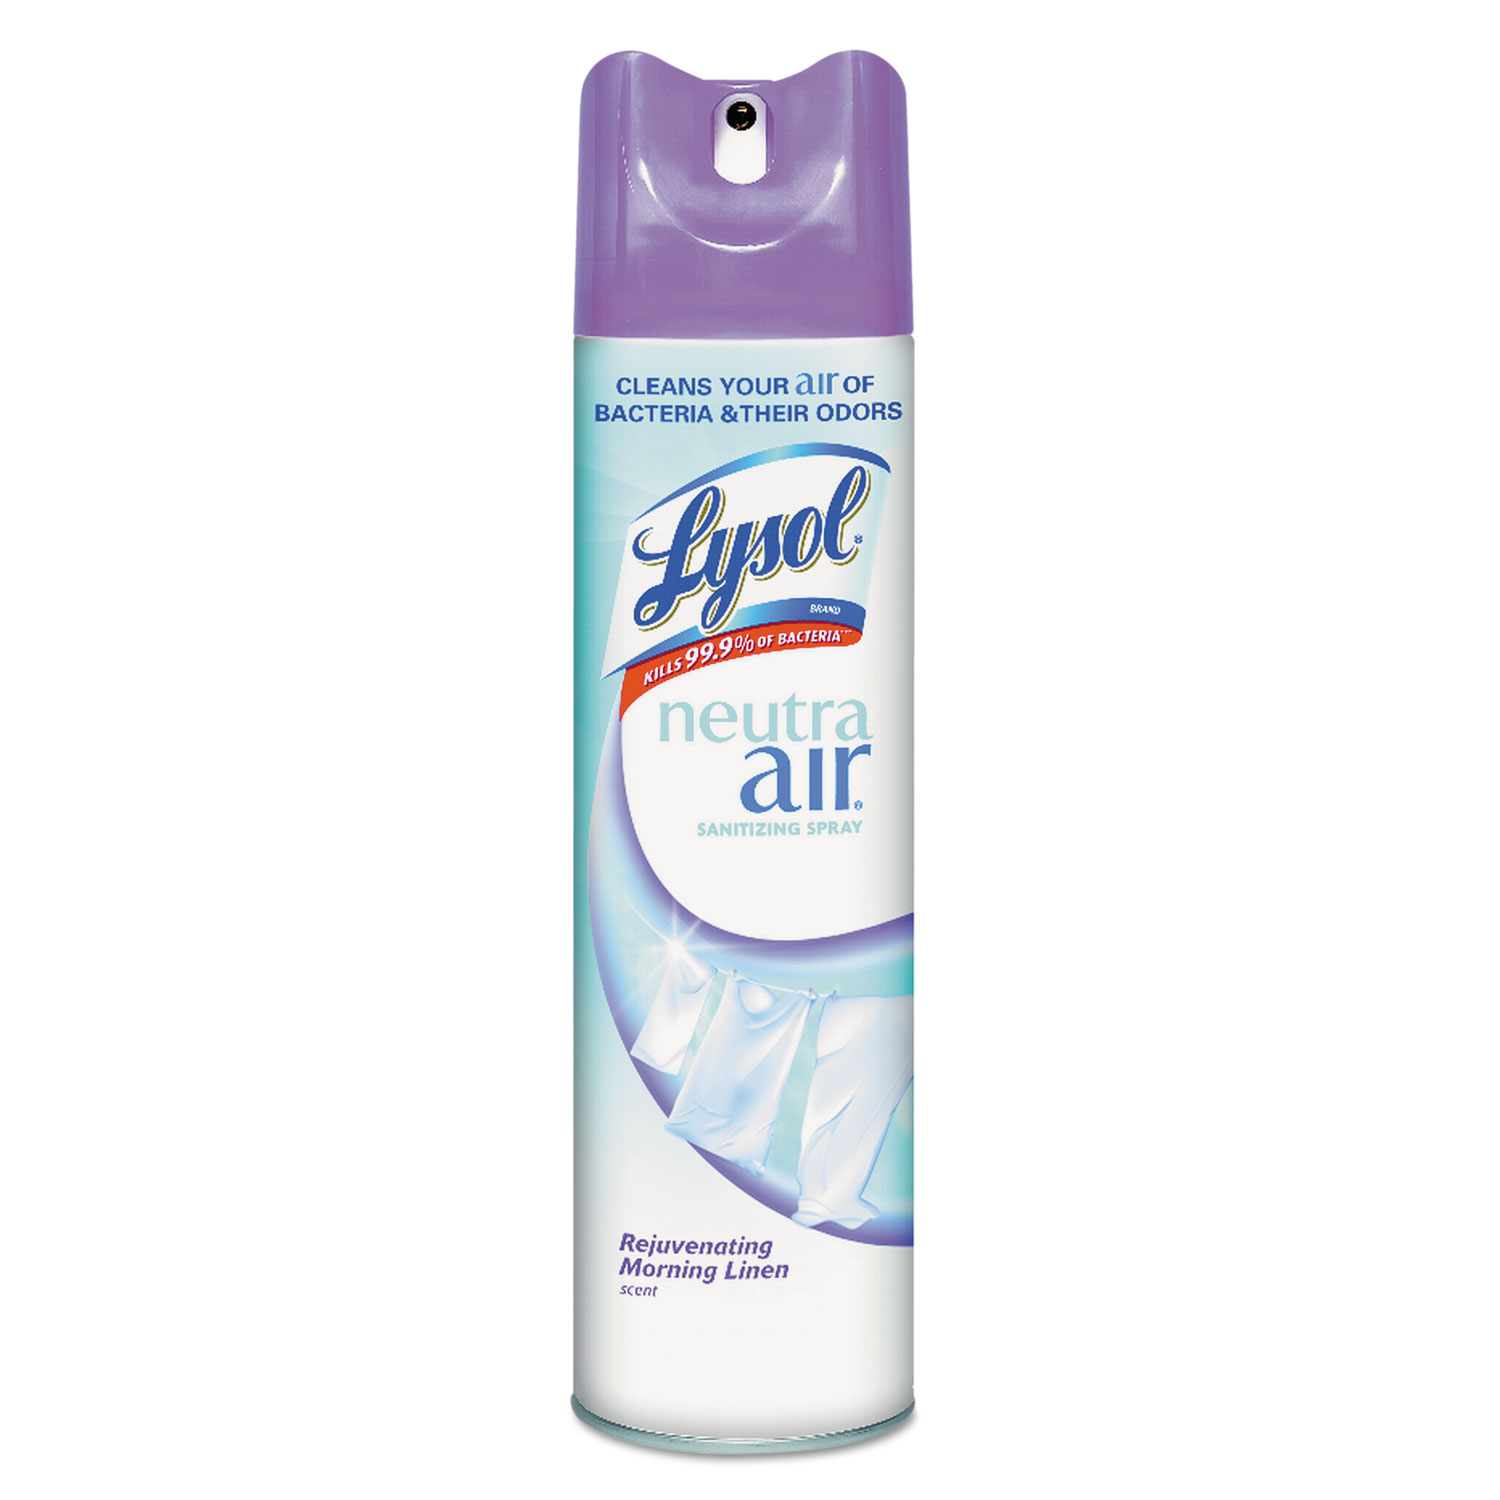  LYSOL Neutra Air 19200-79196 Sanitizing Spray, Rejuvenating Morning Linen, 10 oz Aerosol, 12/Carton (RAC79196) 